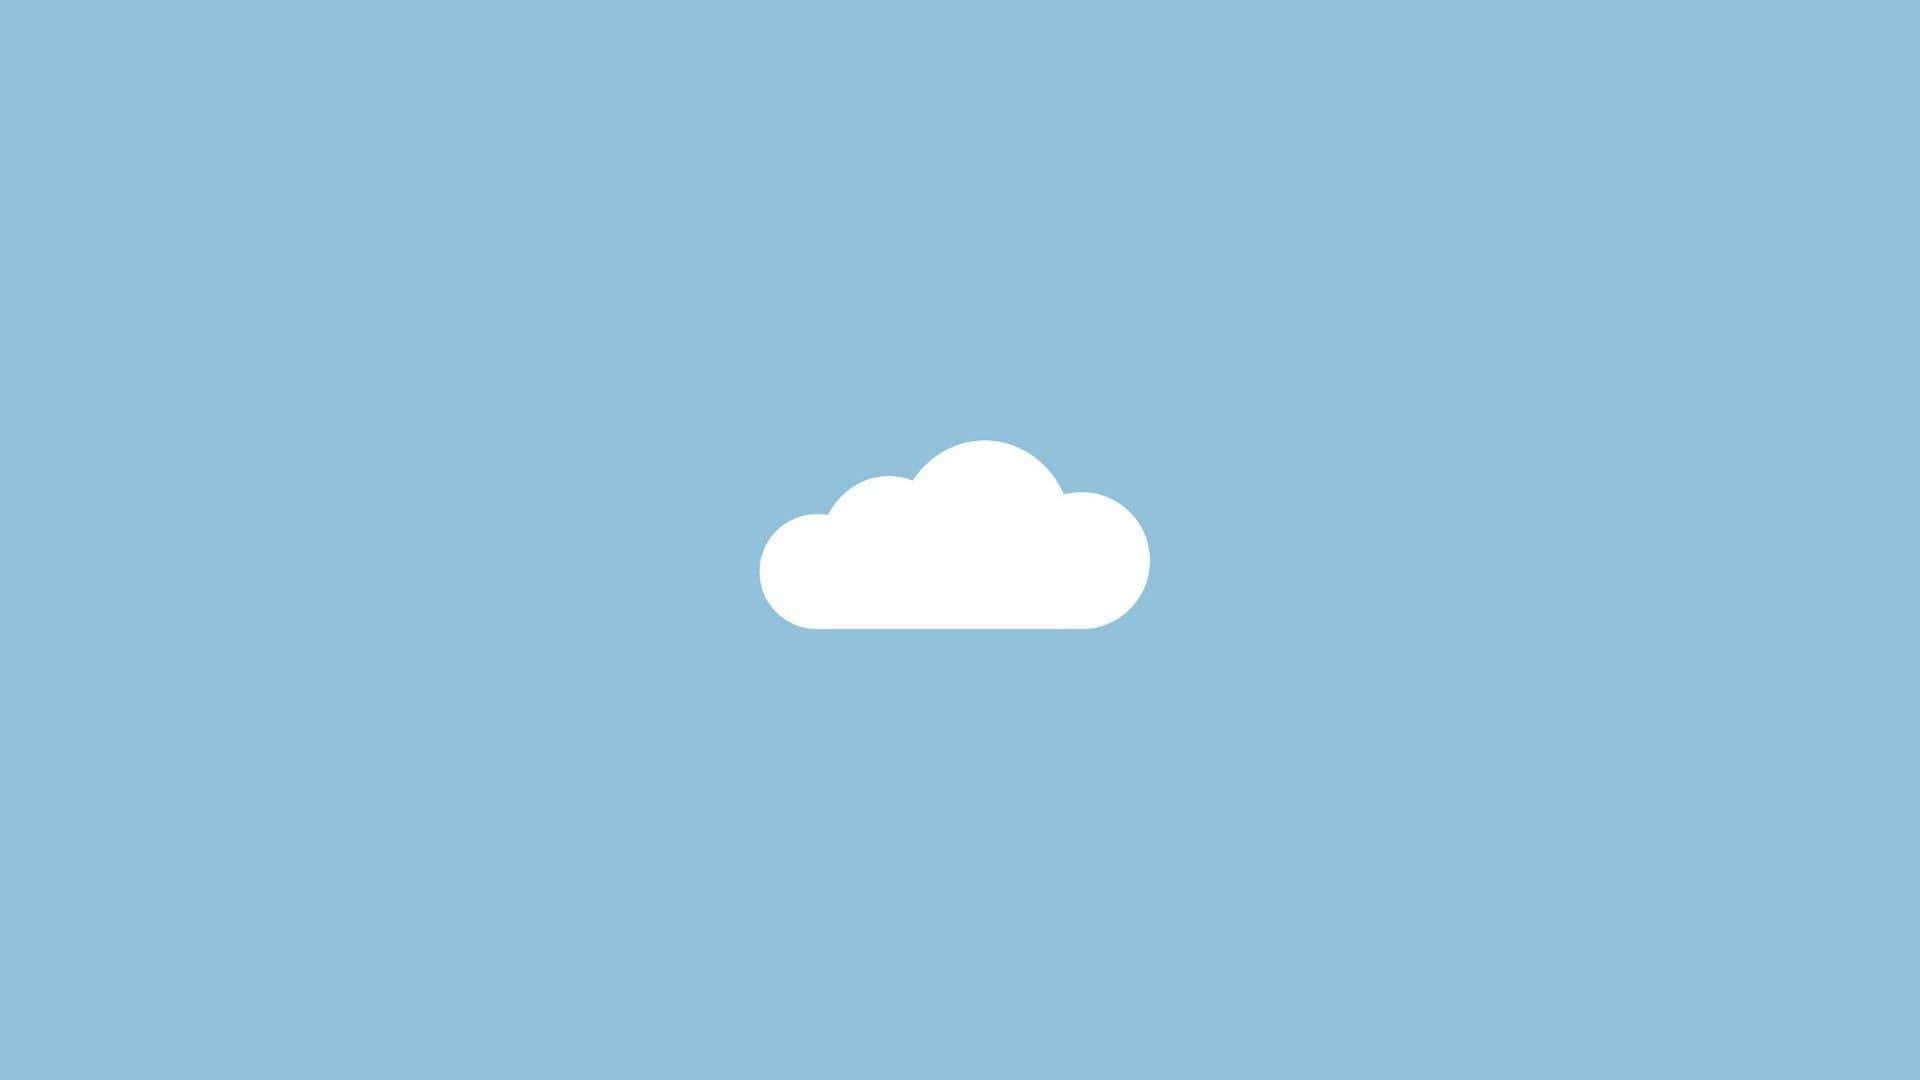 Aesthetic Light Blue Illustration Of Cloud